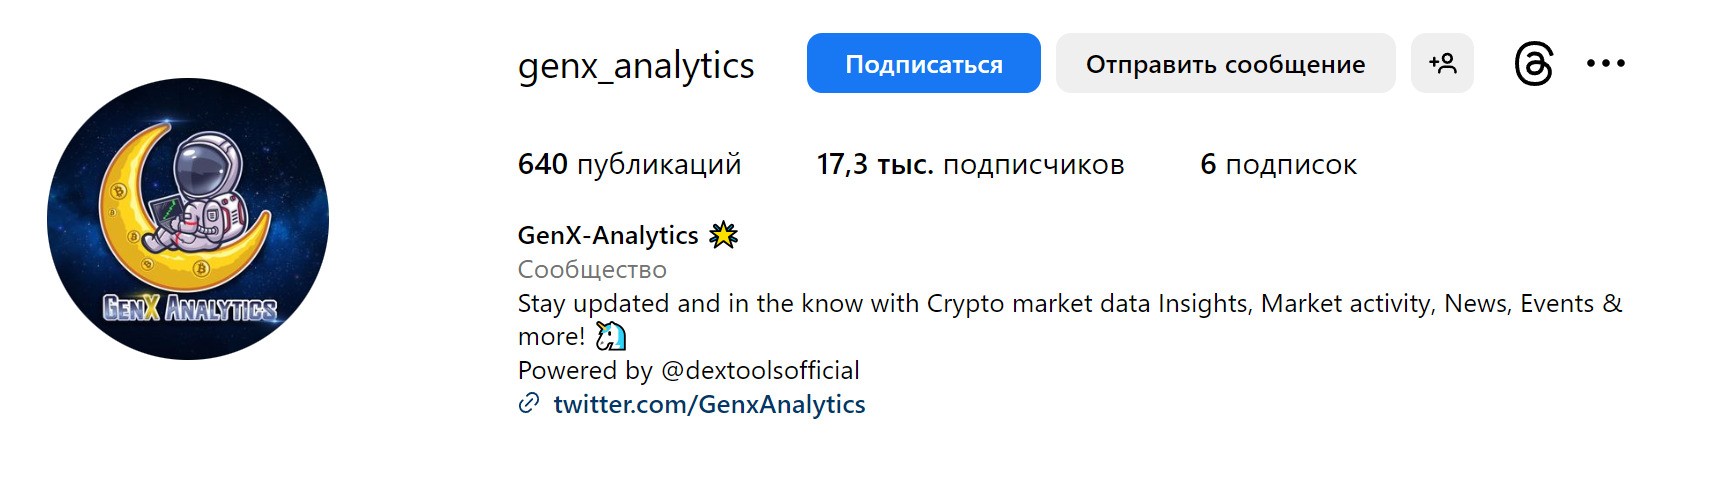 Genx Analytics — Инстаграм